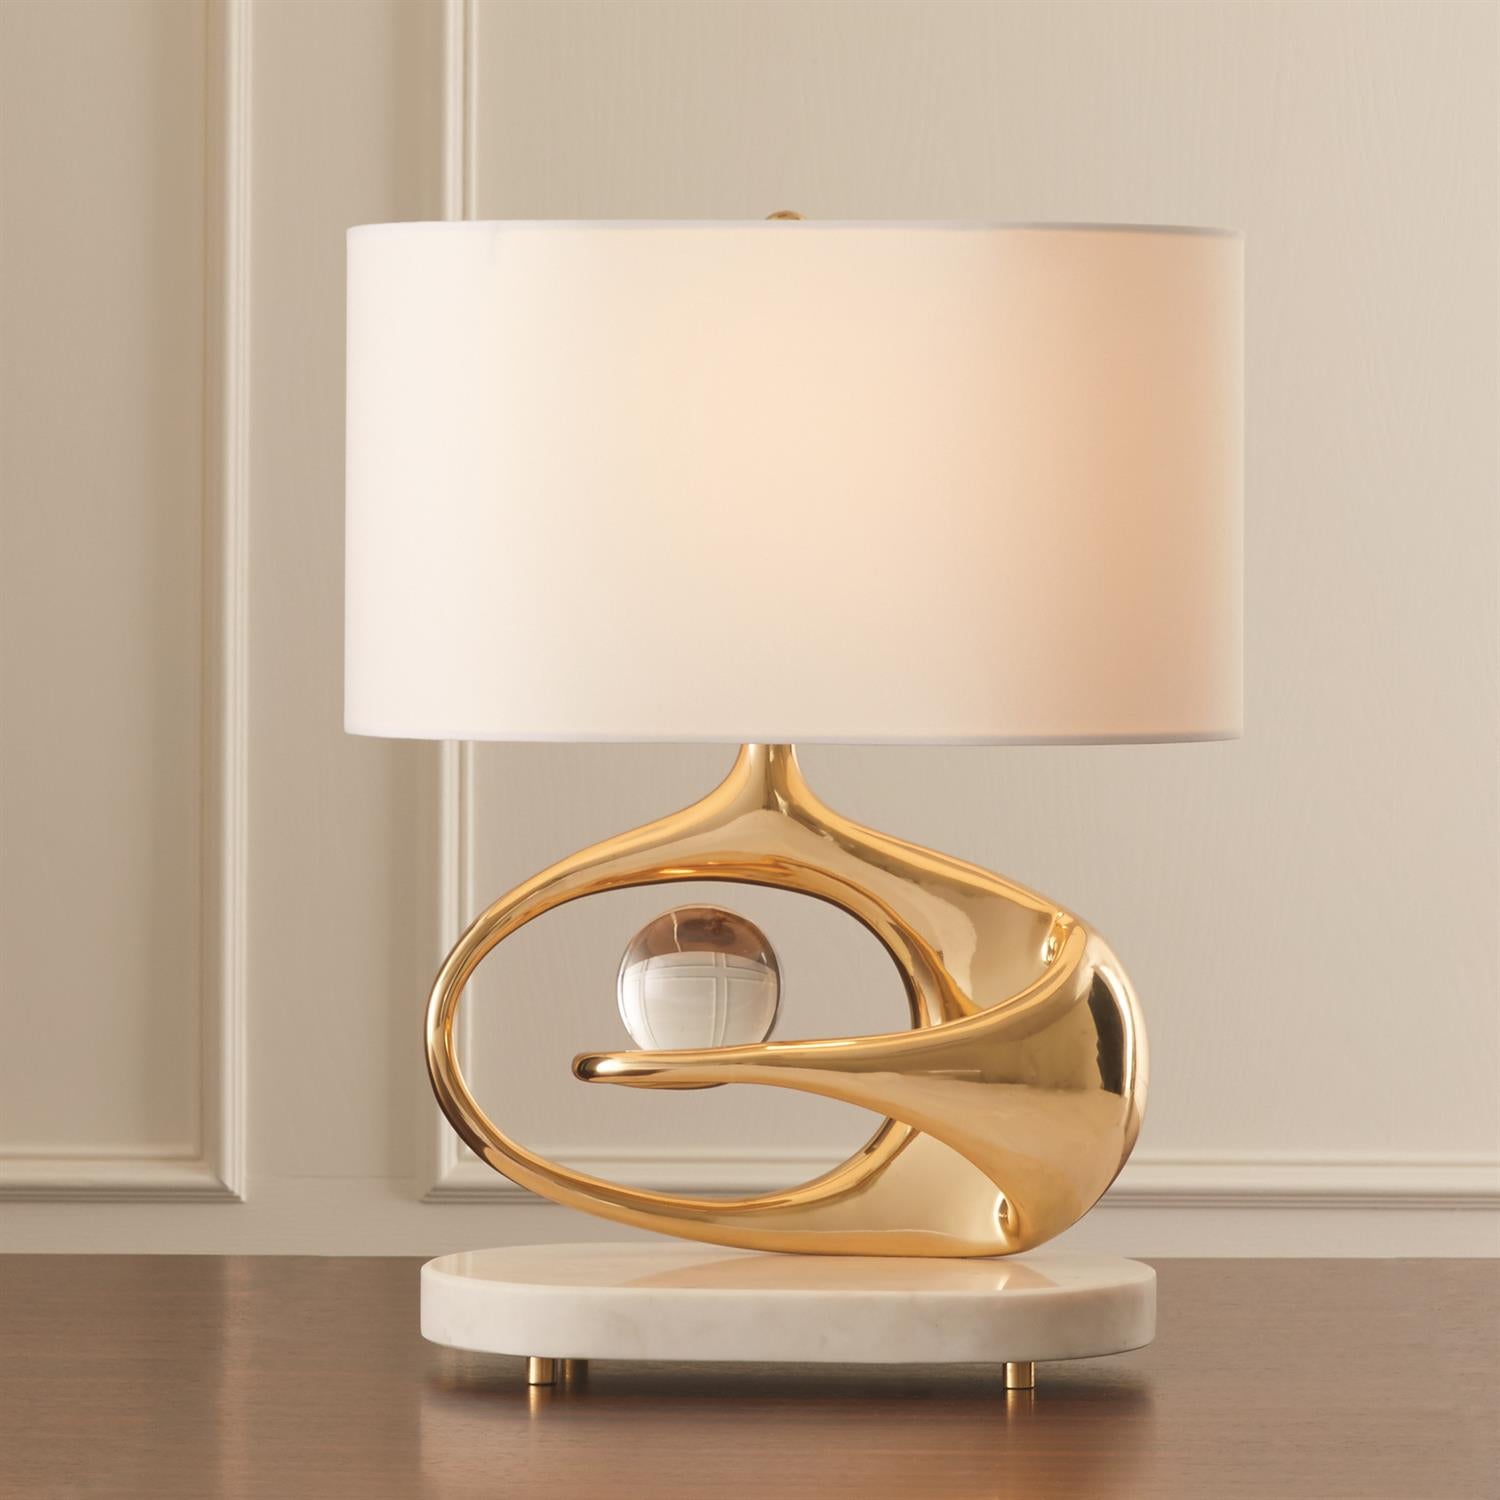 Orbit Lamp - Brass - Grats Decor Interior Design & Build Inc.